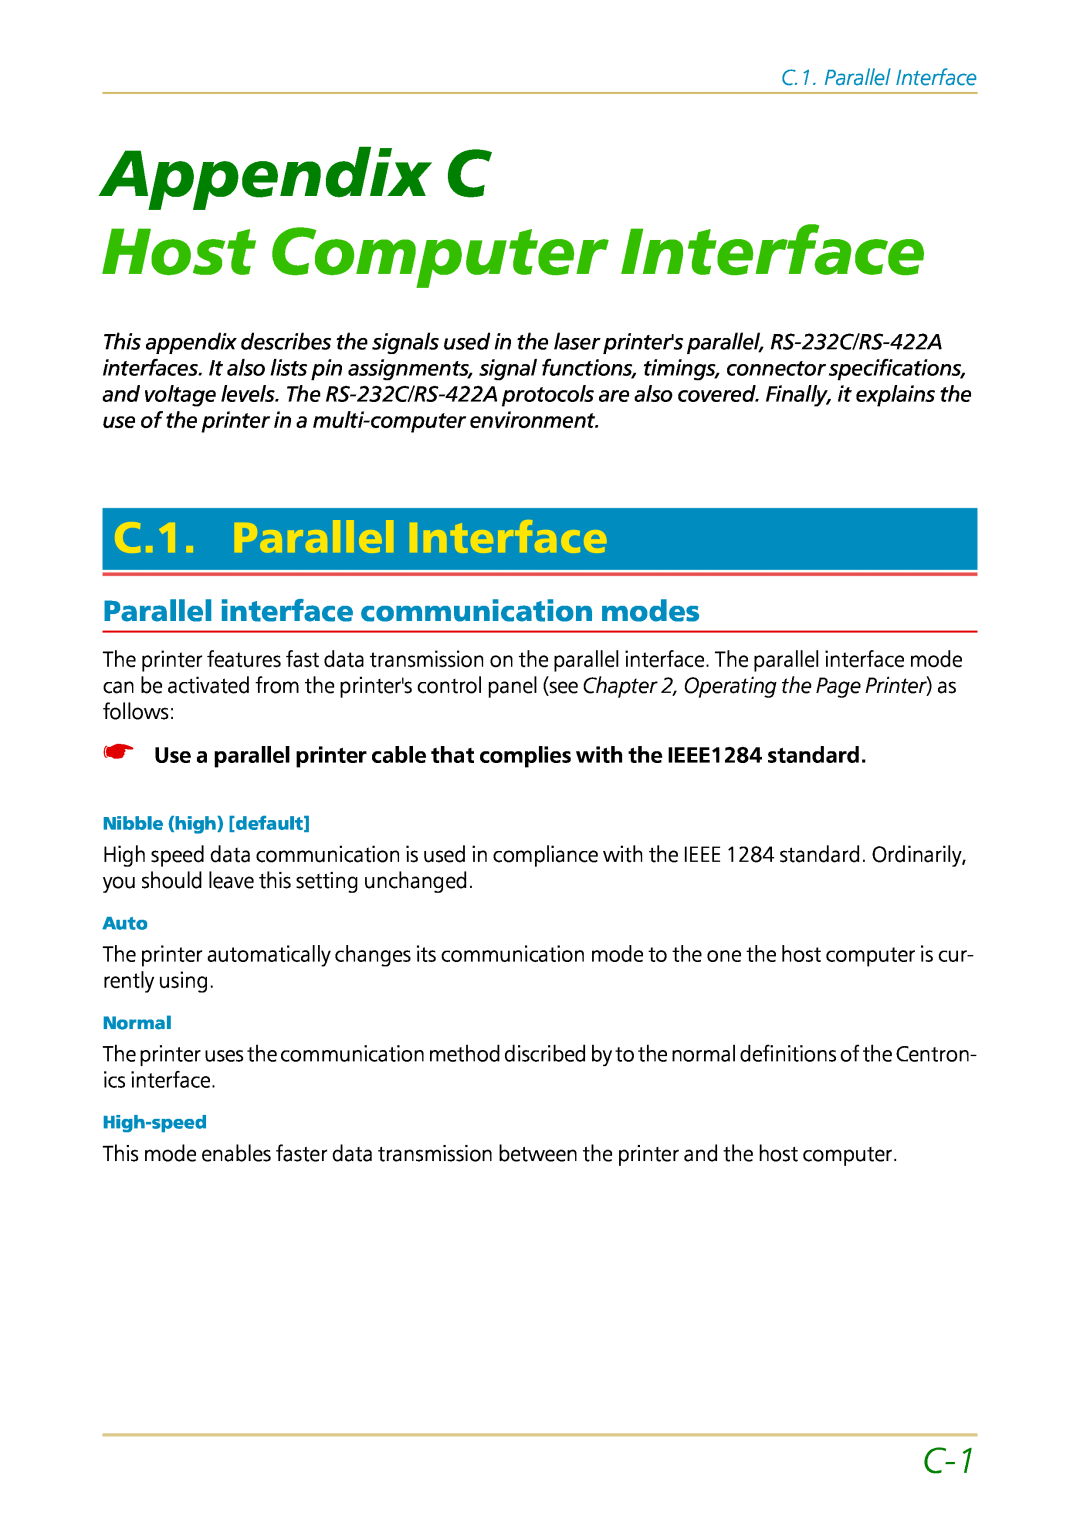 Kyocera FS-1700 Appendix C, Host Computer Interface, C.1. Parallel Interface, Parallel interface communication modes 